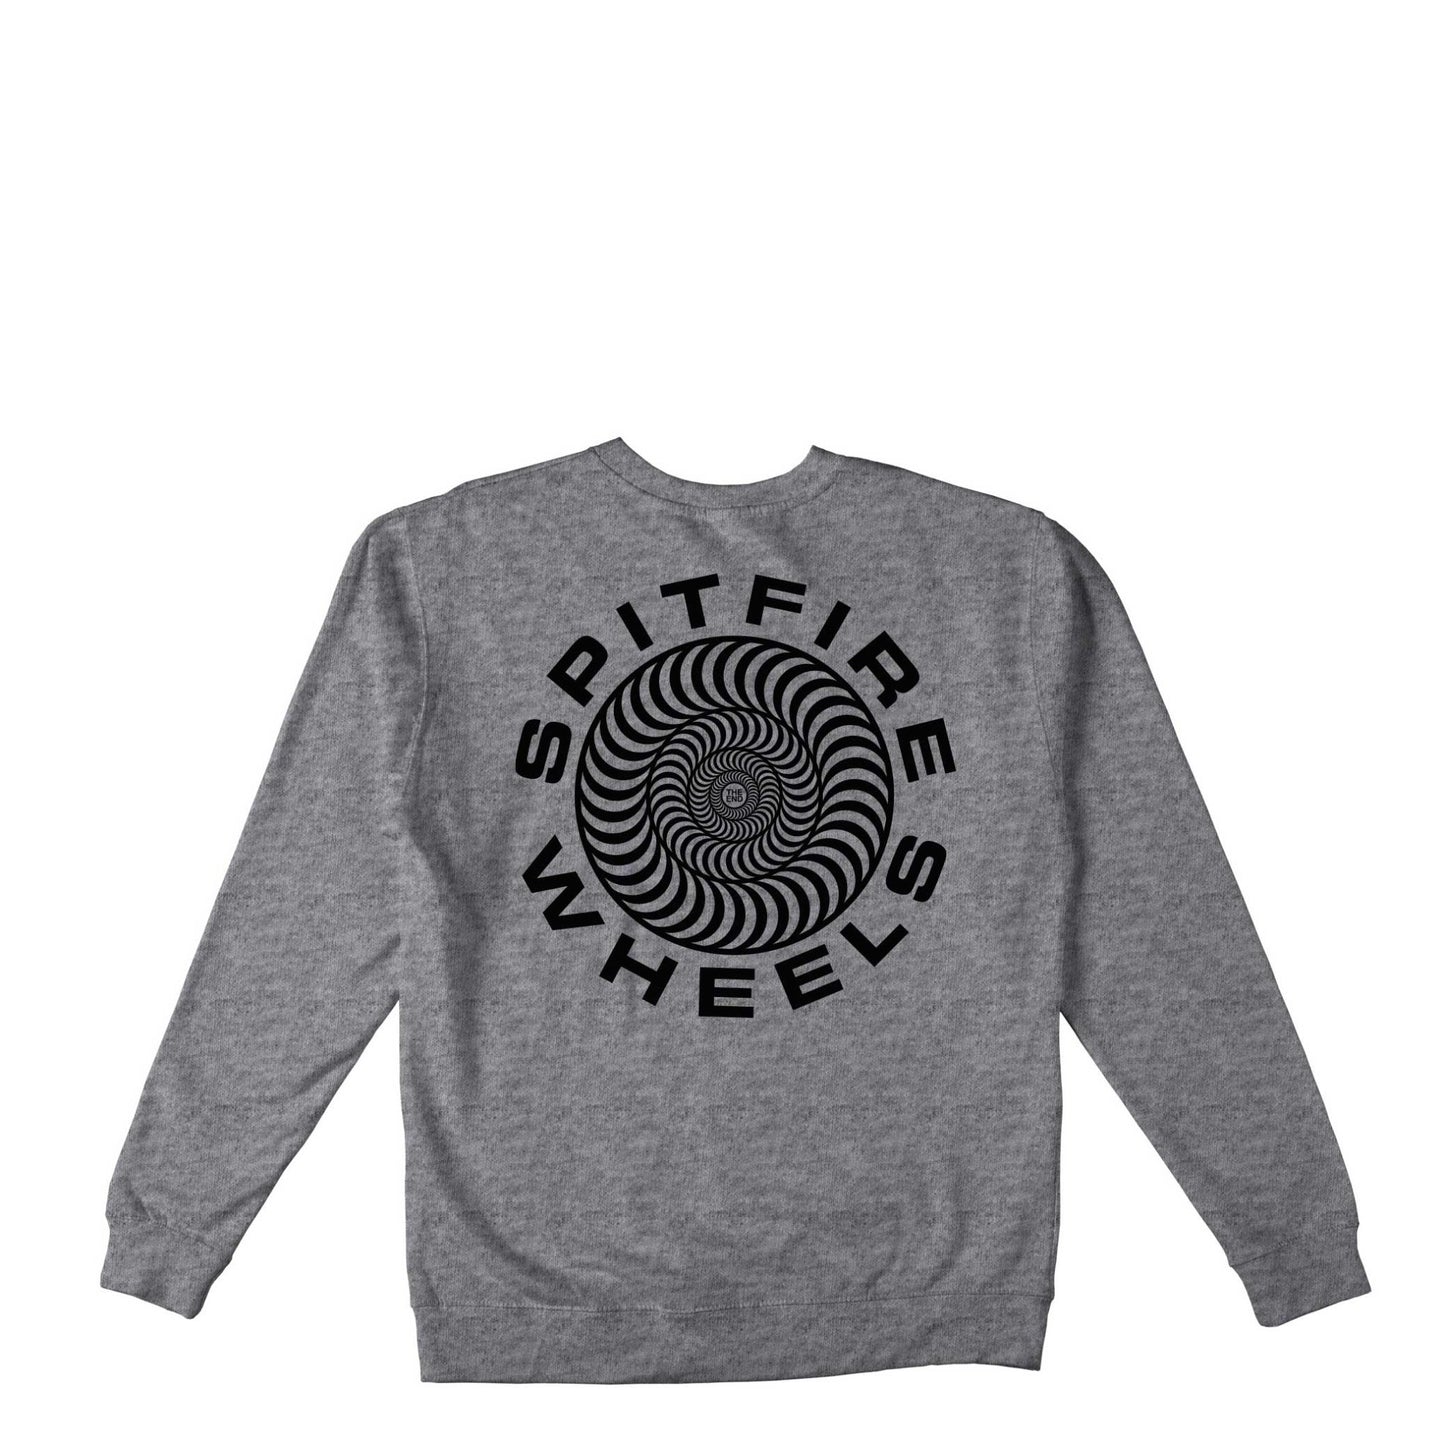 Spitfire Classic 87' Swirl Crewneck Sweatshirt, grey heather w/ black prints - Tiki Room Skateboards - 2